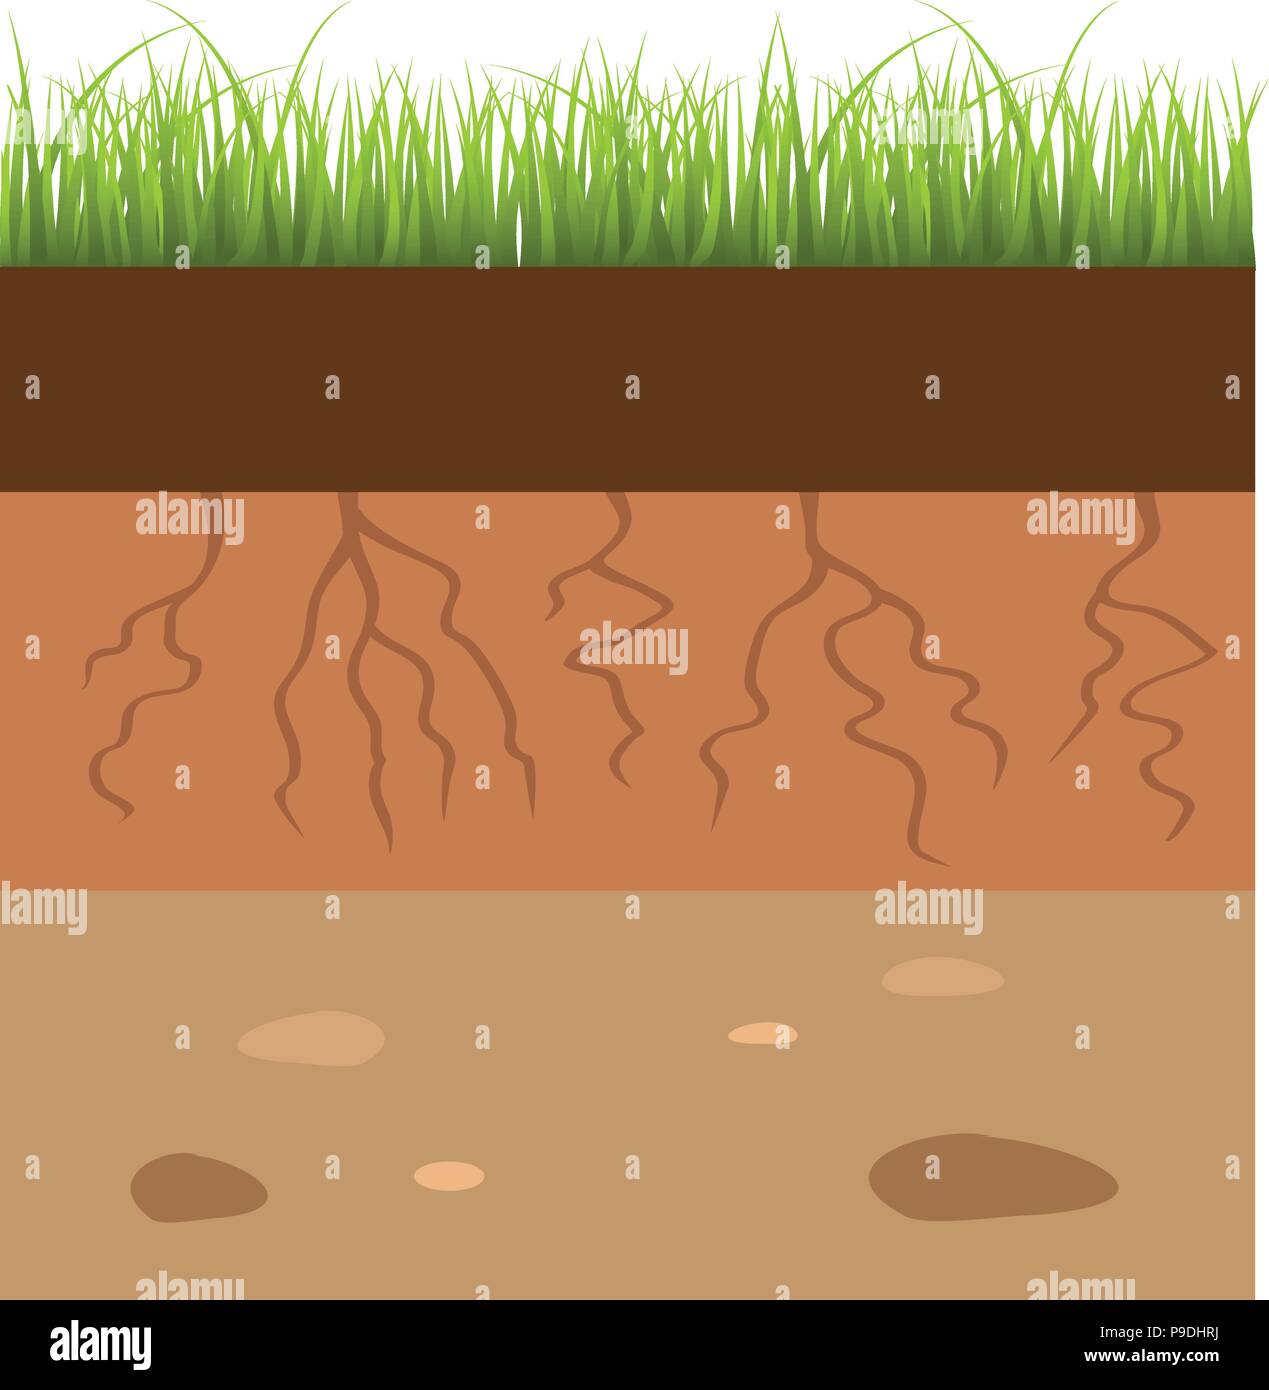 cartoon vector illustration of soil layers Stock Vector